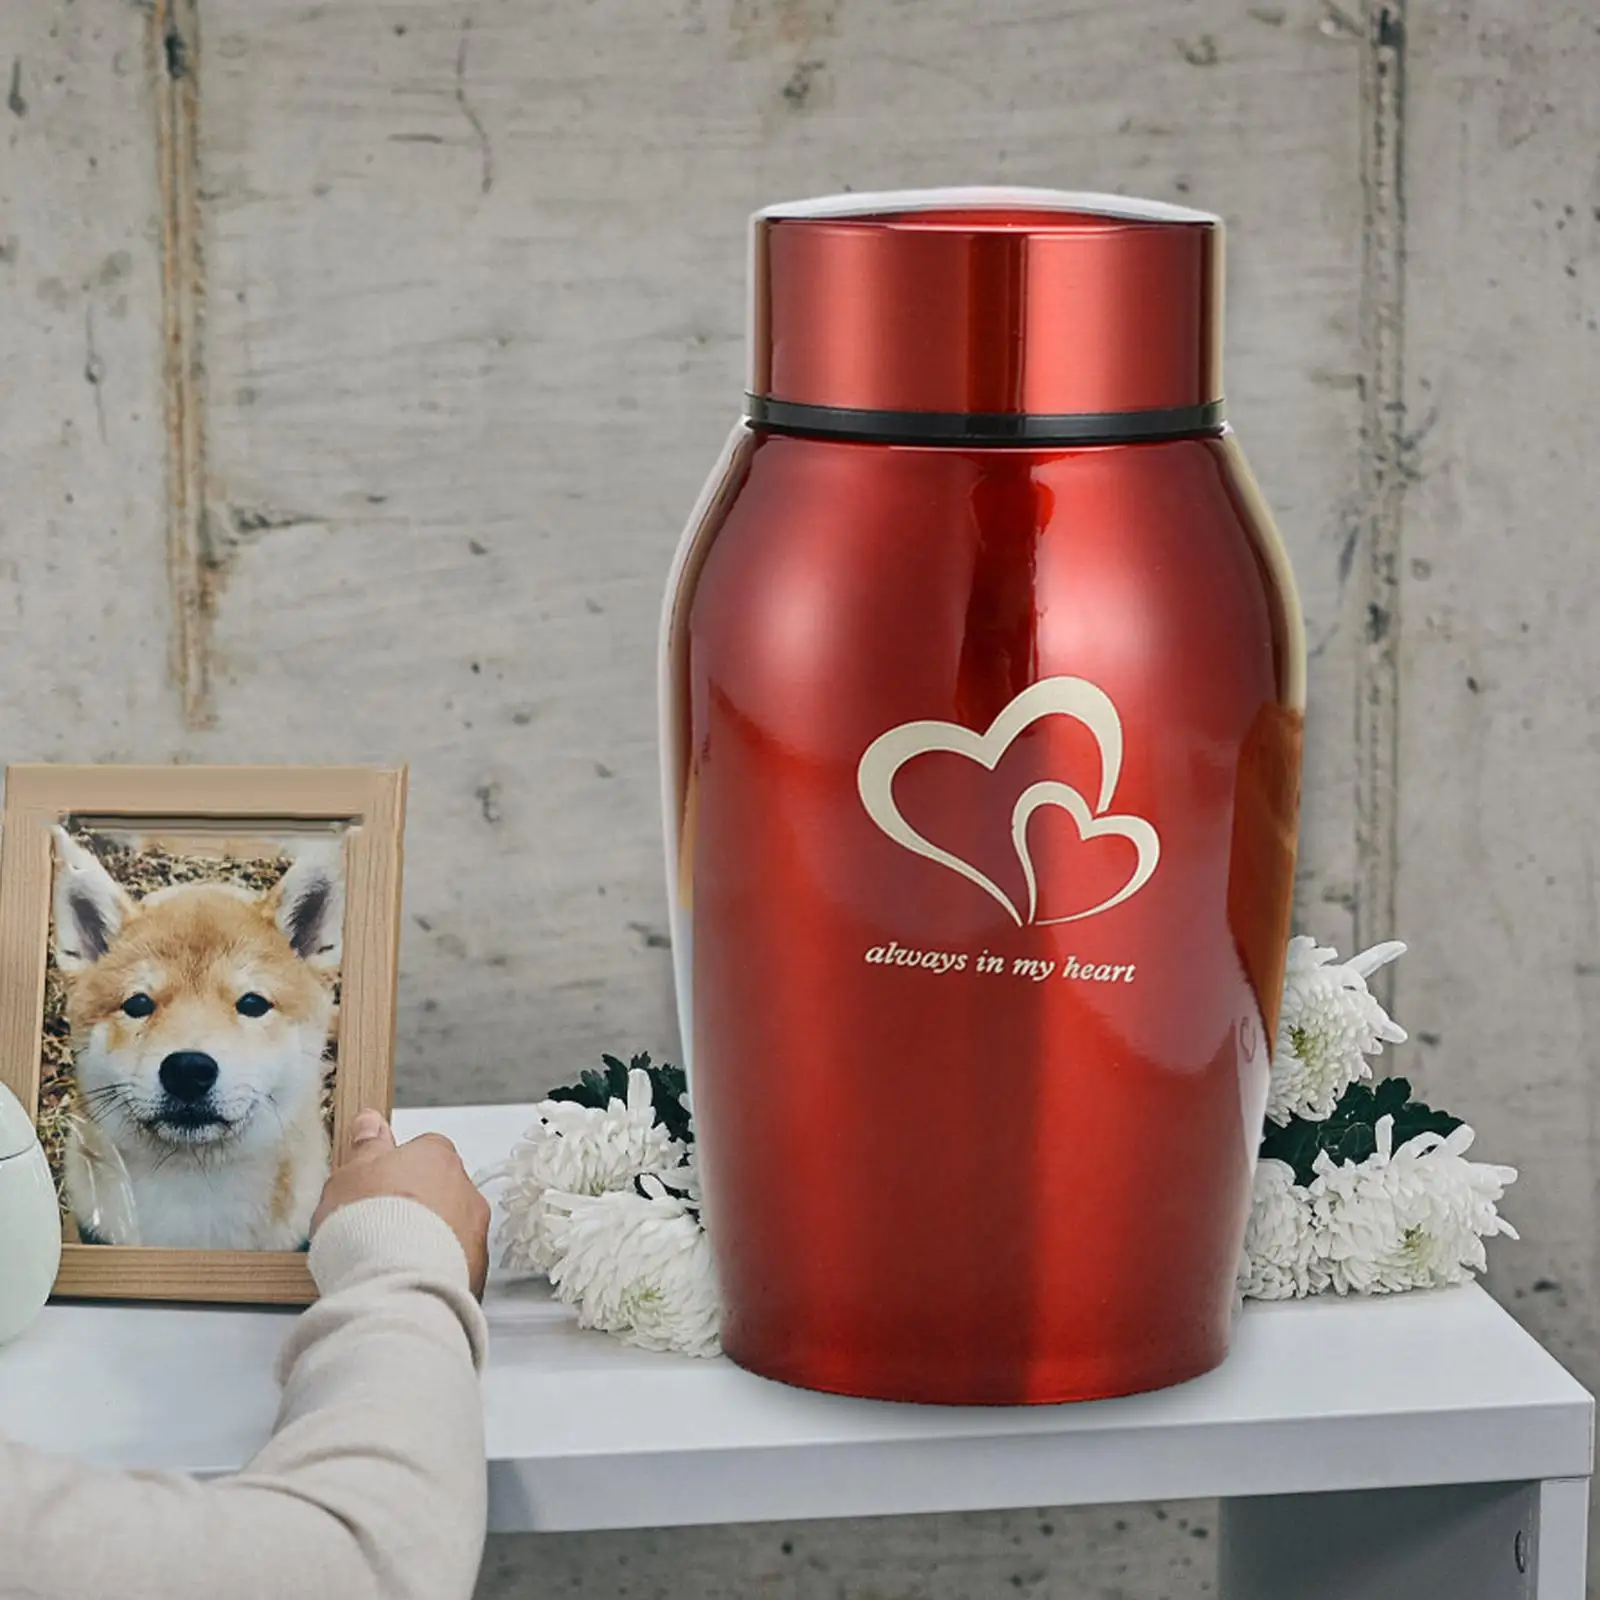 Pet Urn Container Jar Keeping Precious Memories Funeral Portable Durable Burial Keepsake Urns for Puppy Kitten Cat Rabbit